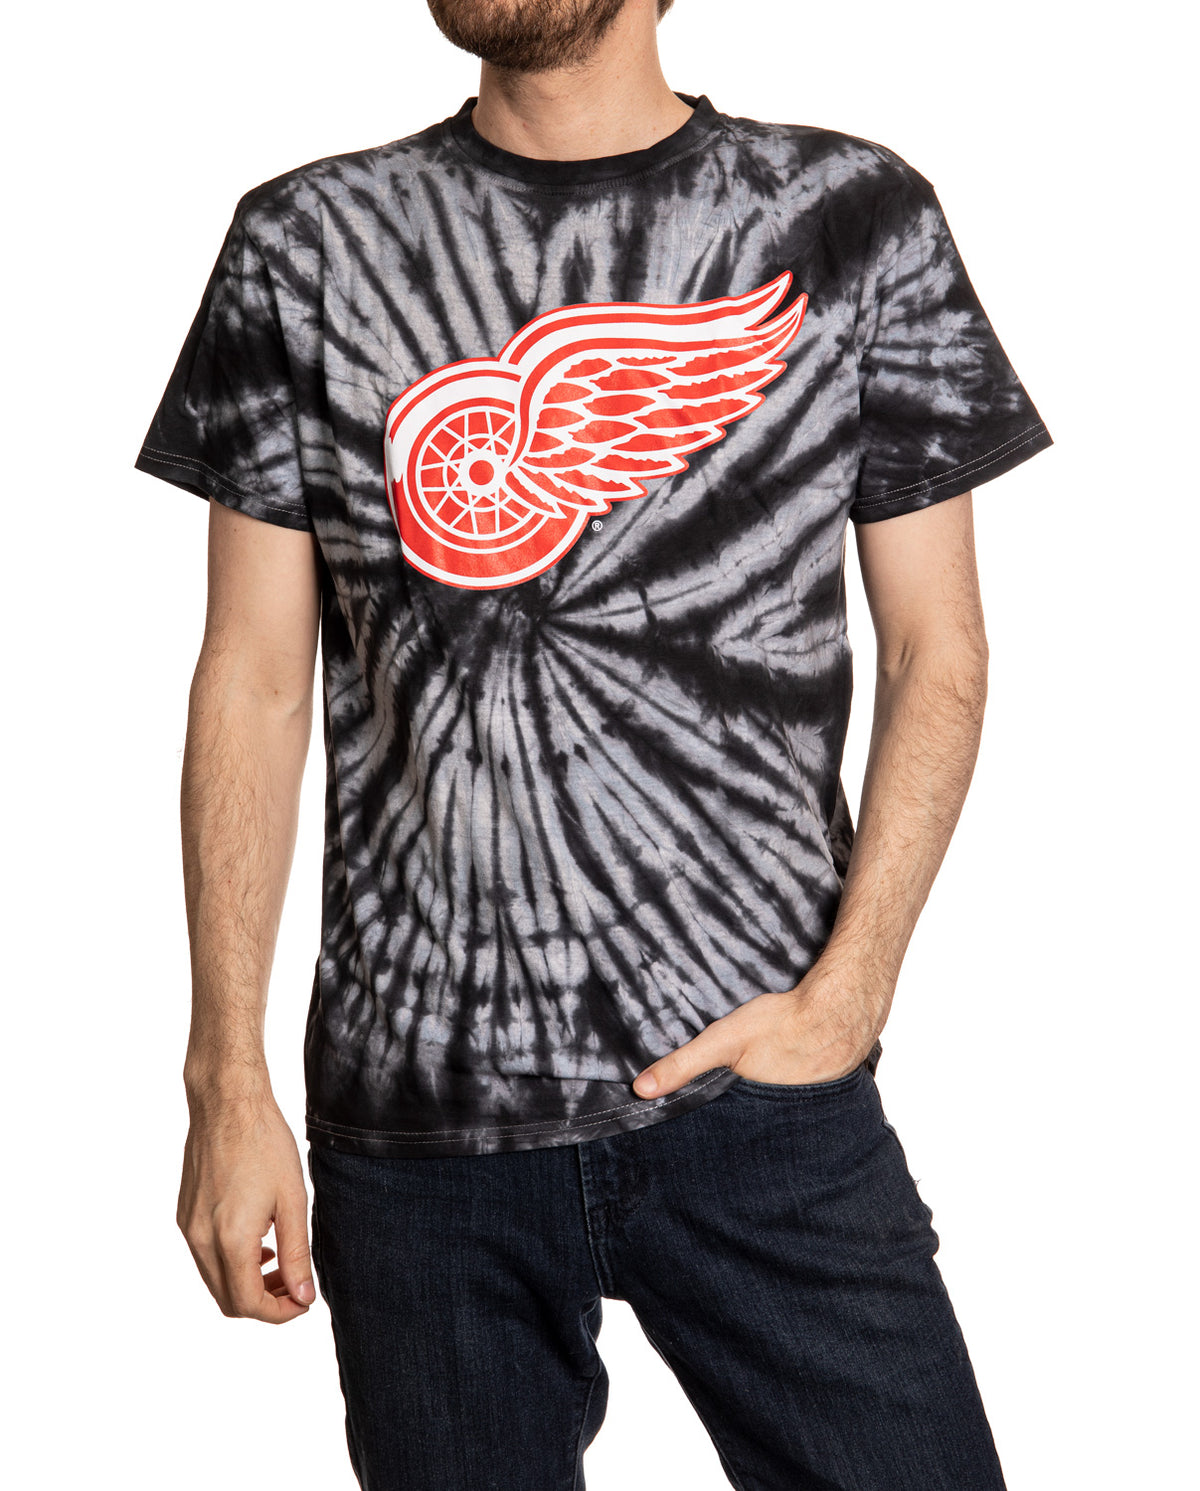 Detroit Red Wings Spiral Tie Dye T-Shirt